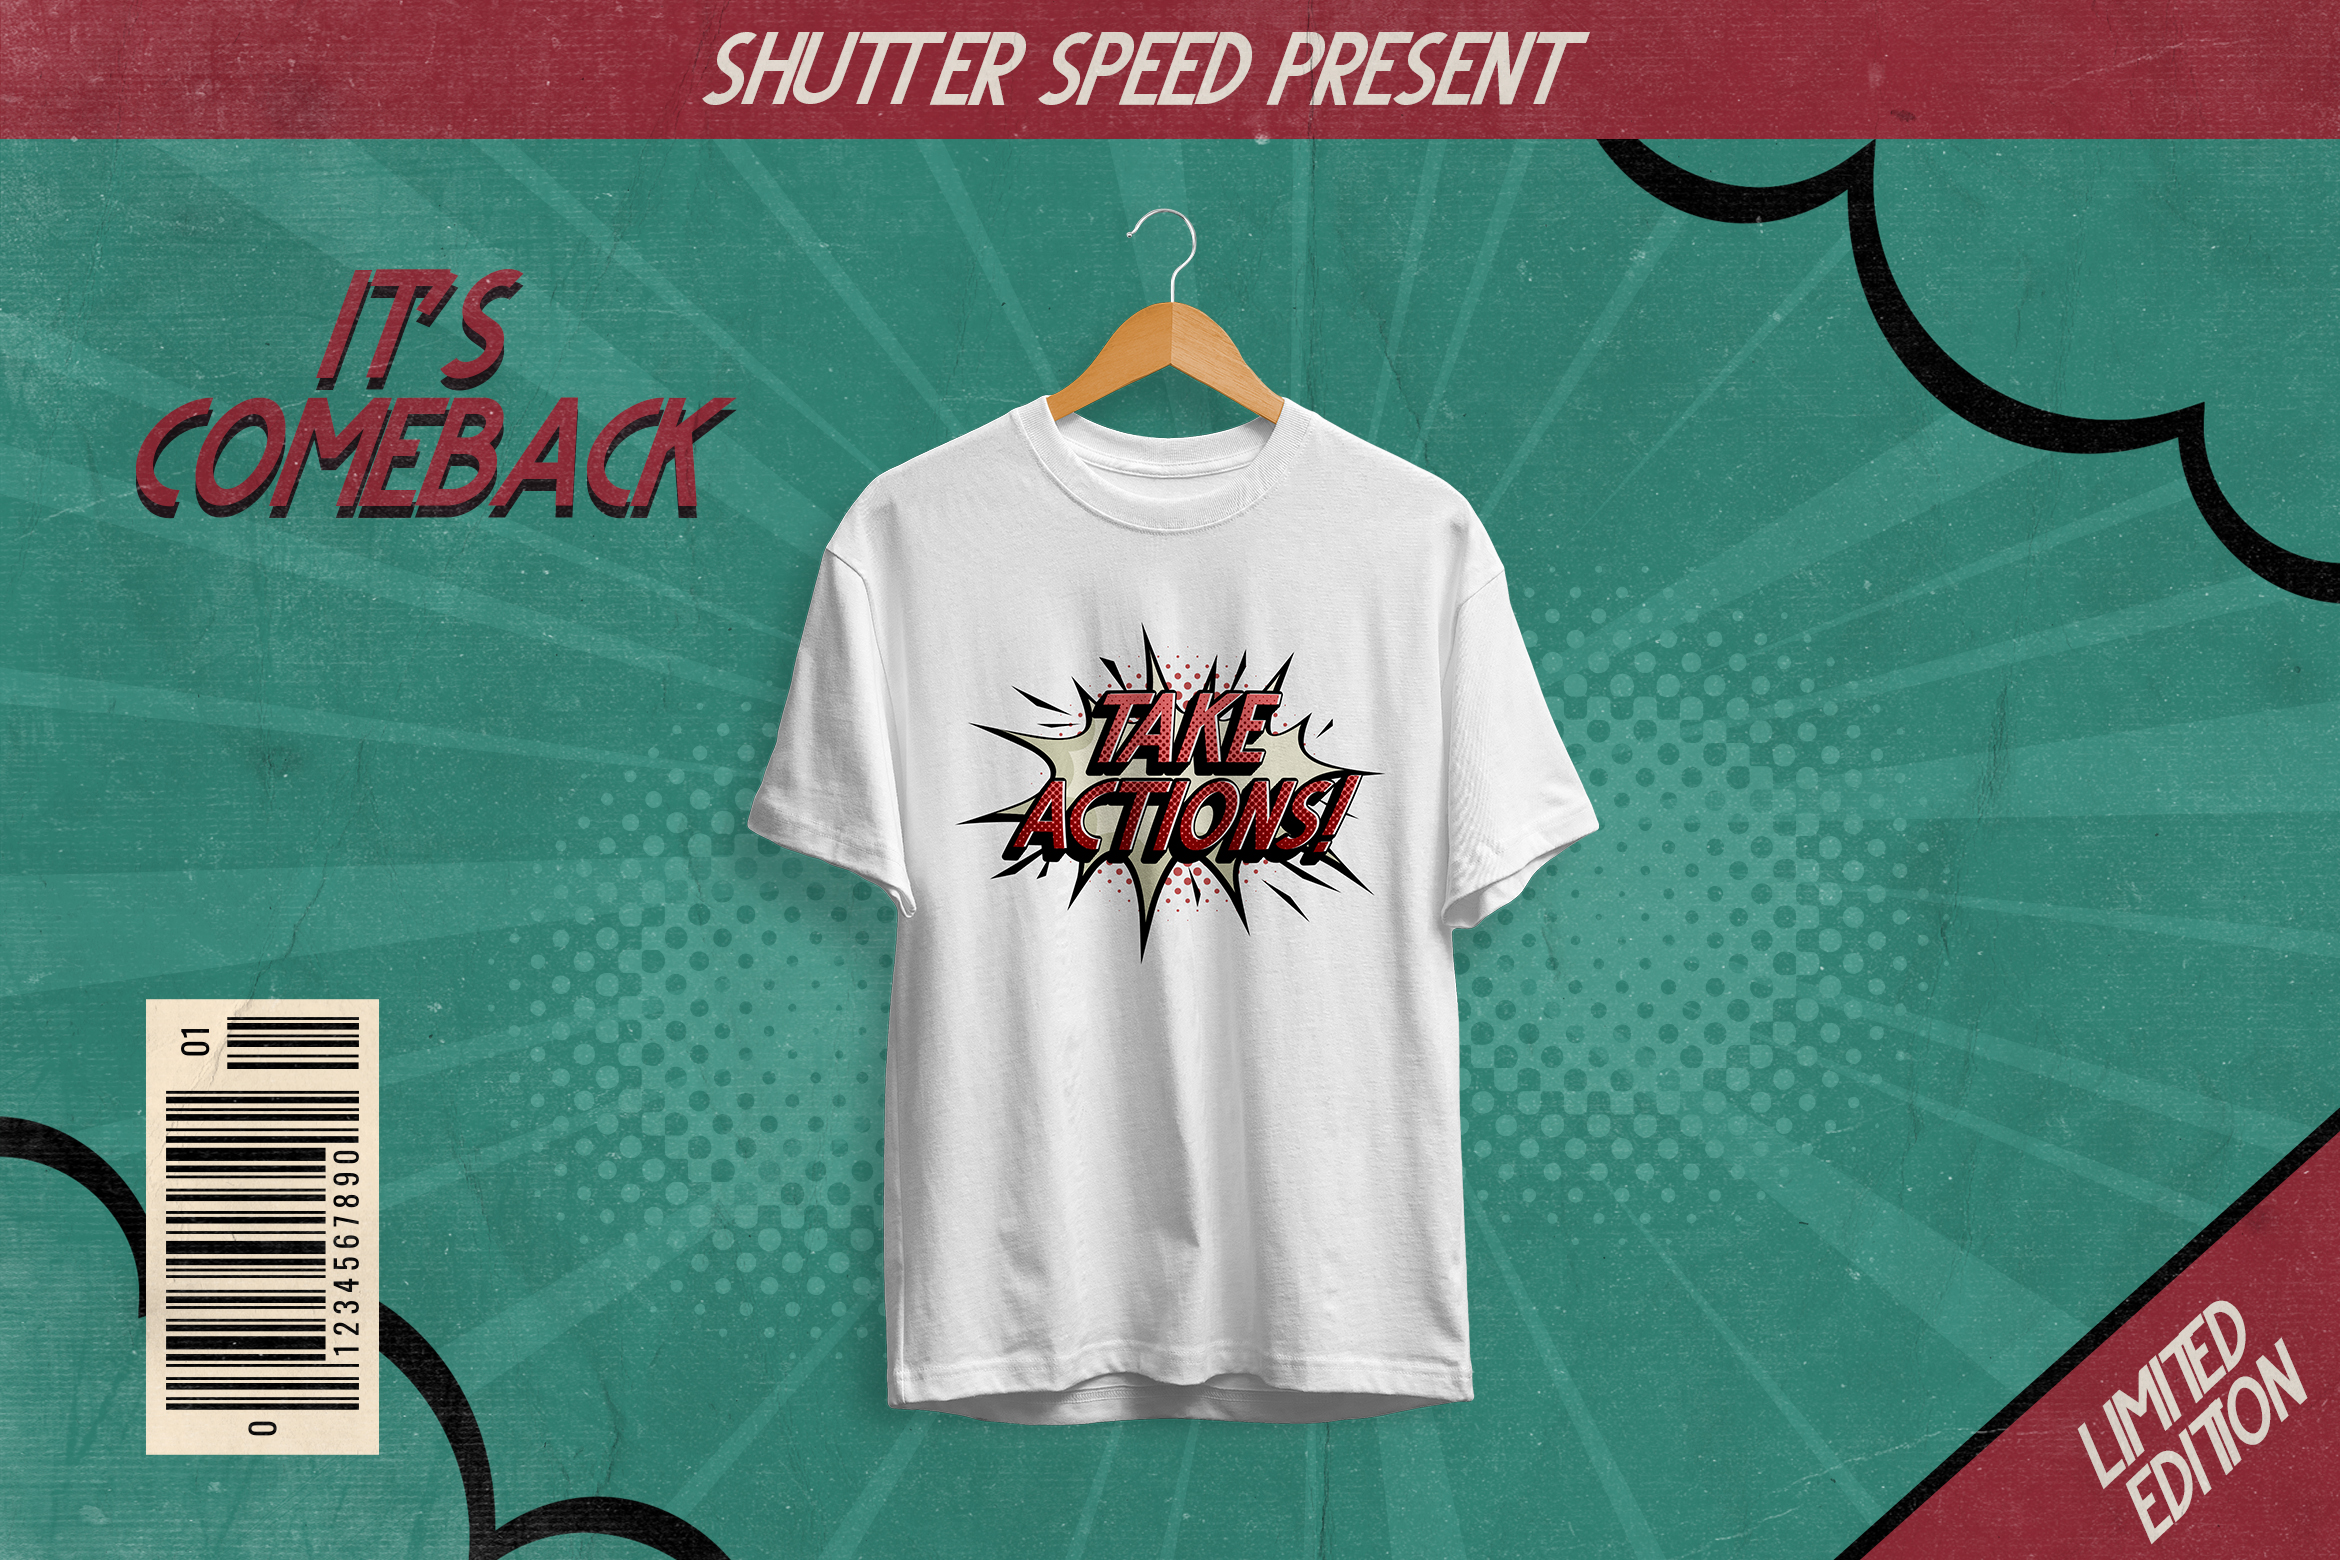 Shutter Speed Free Trial